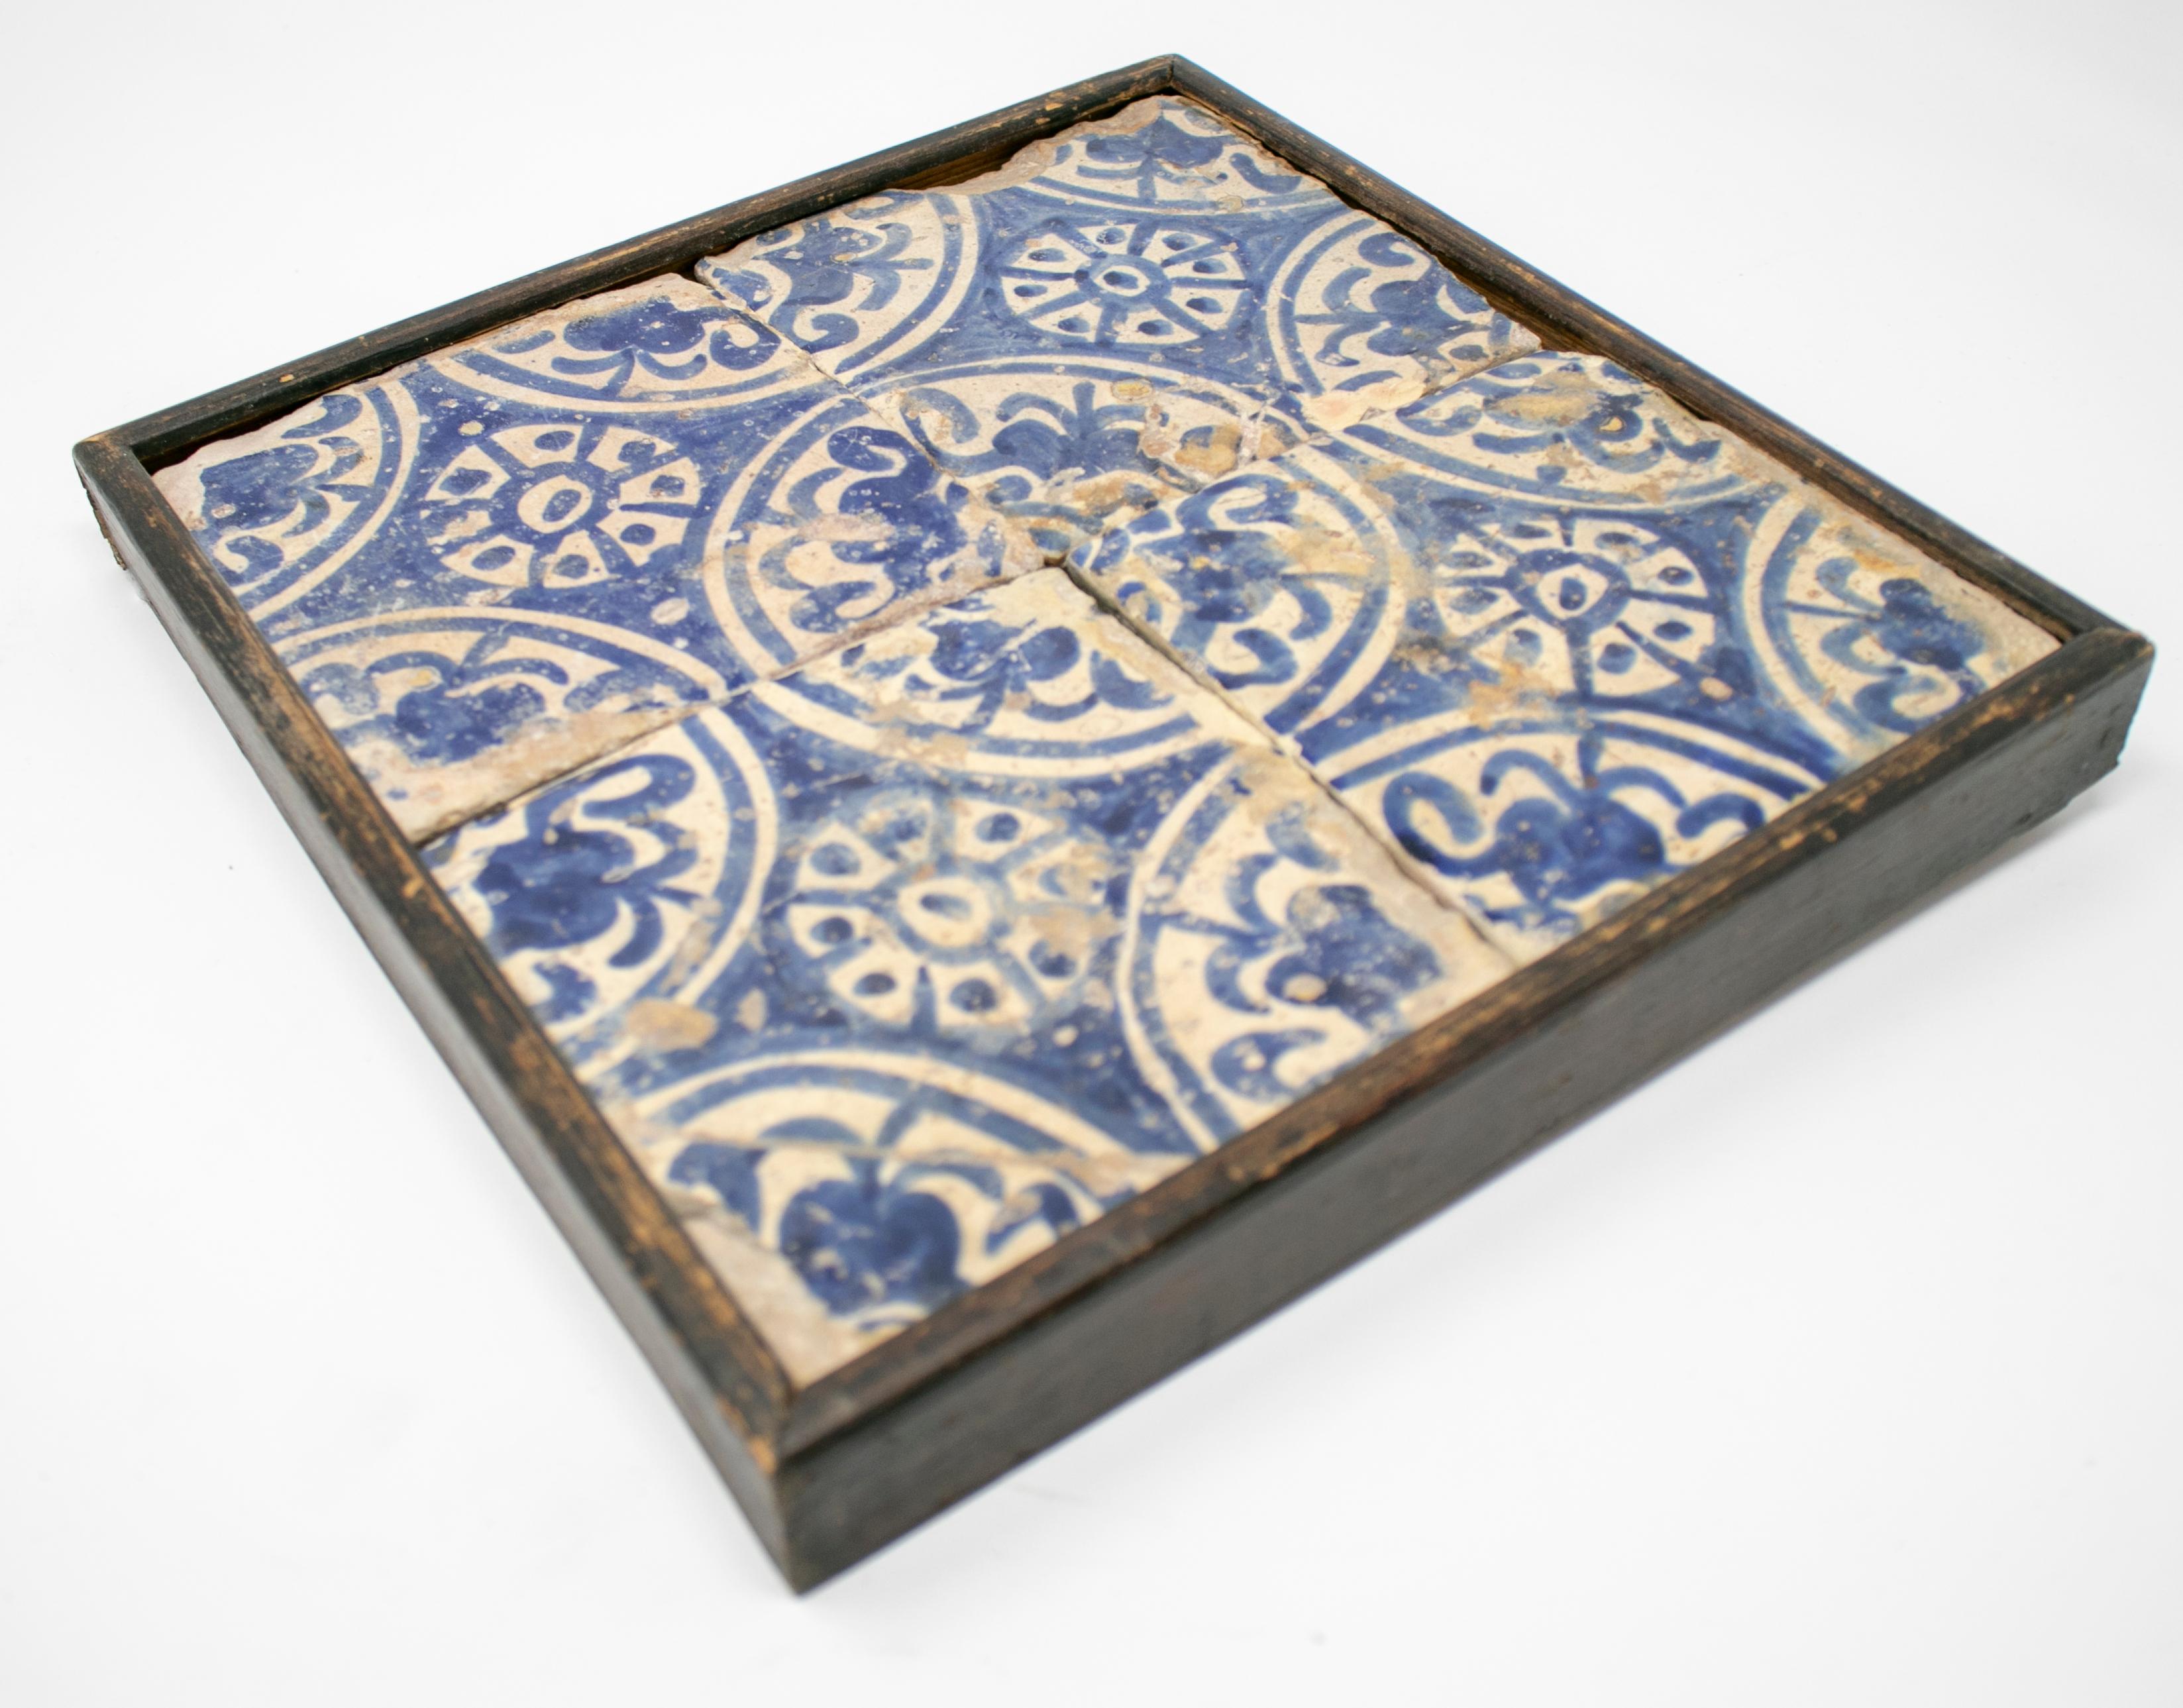 19th century framed panel with four Spanish glazed Manises blue cobalt painted tiles.